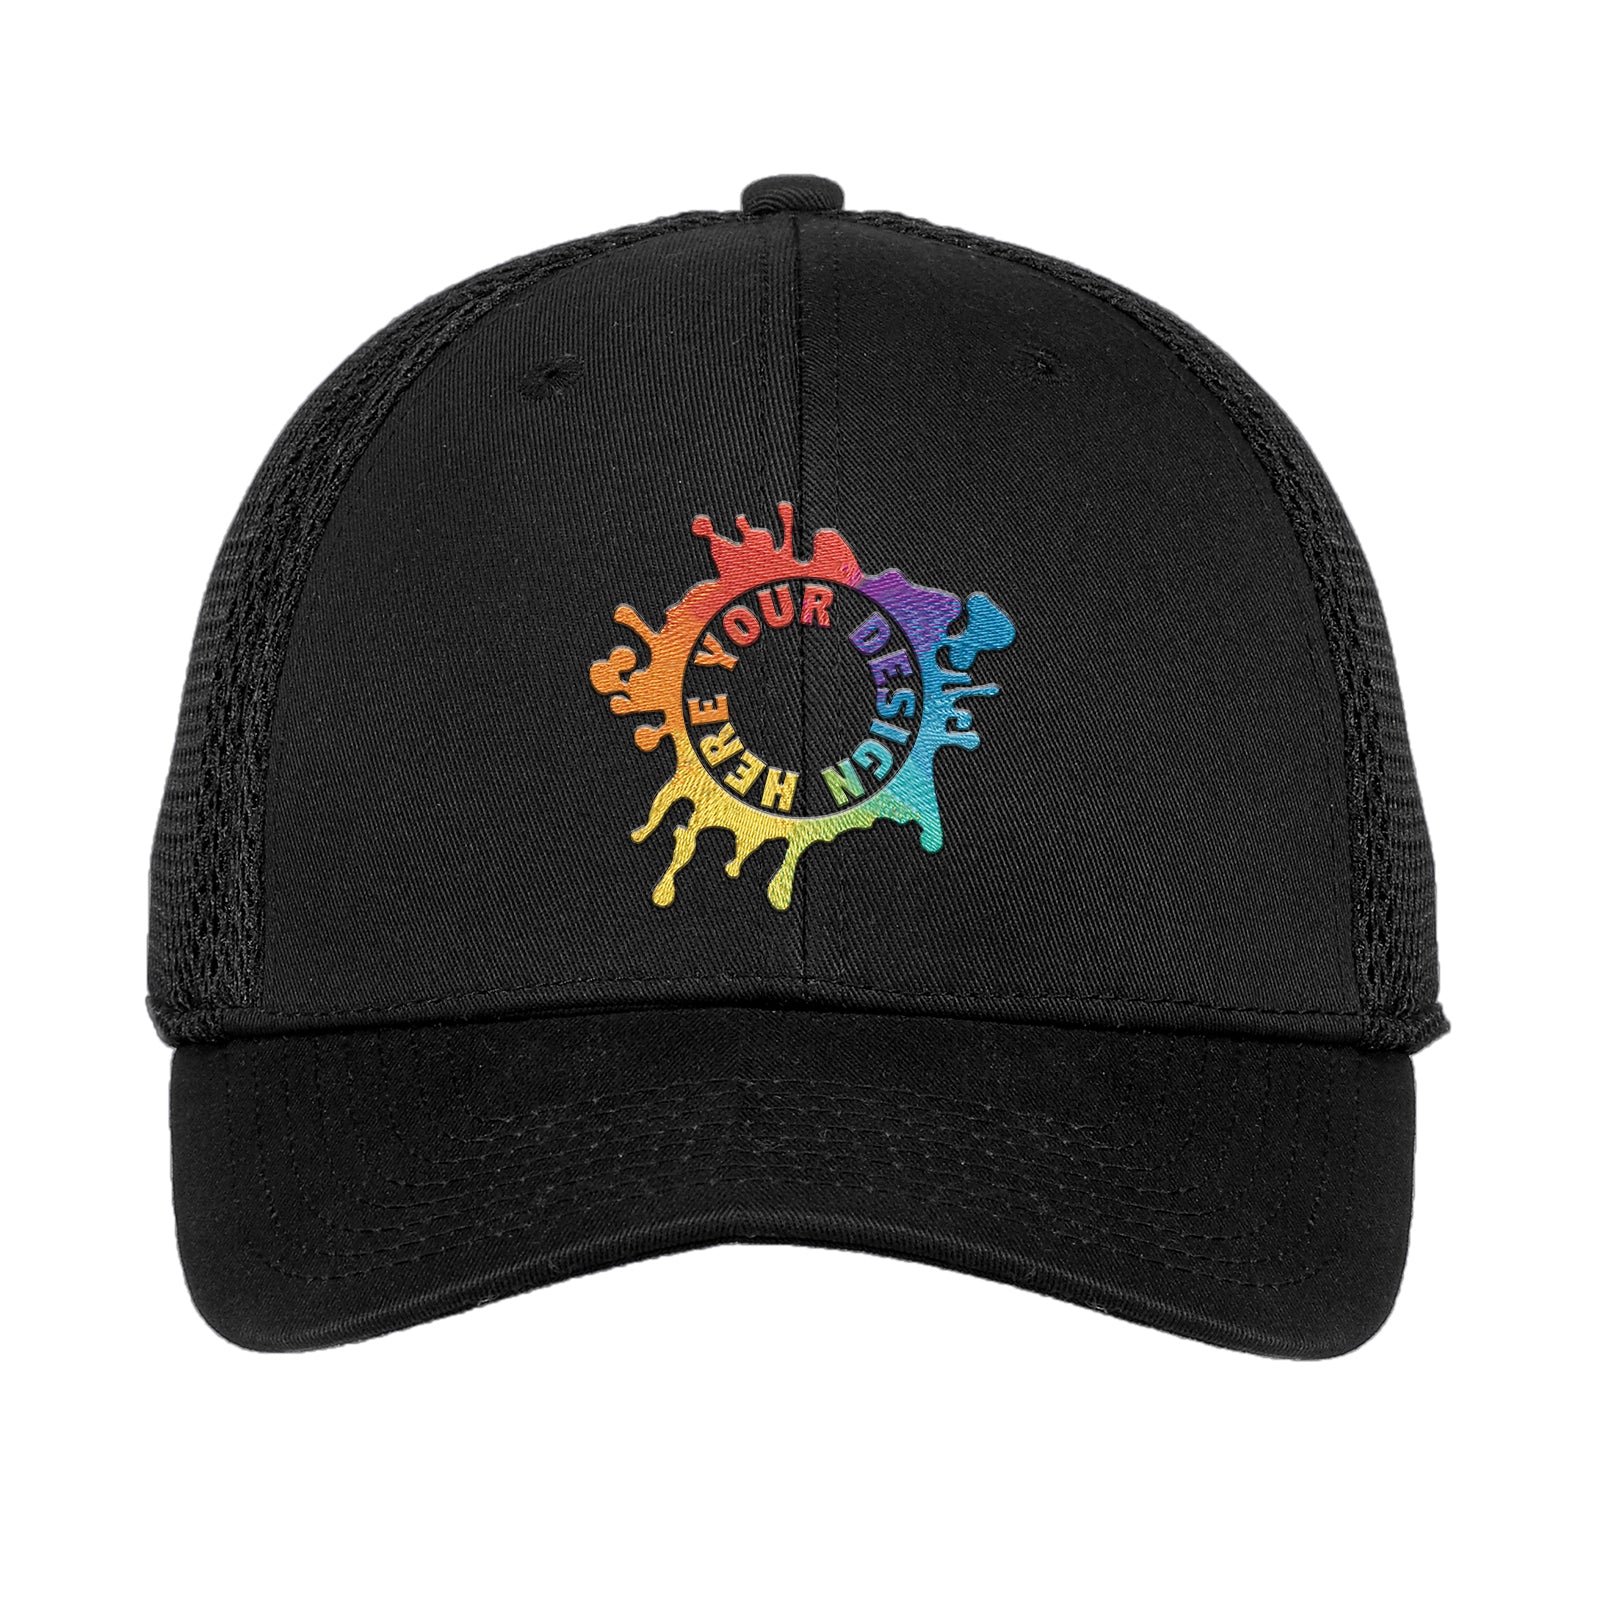 Custom New Era Hats - Design Online and Create